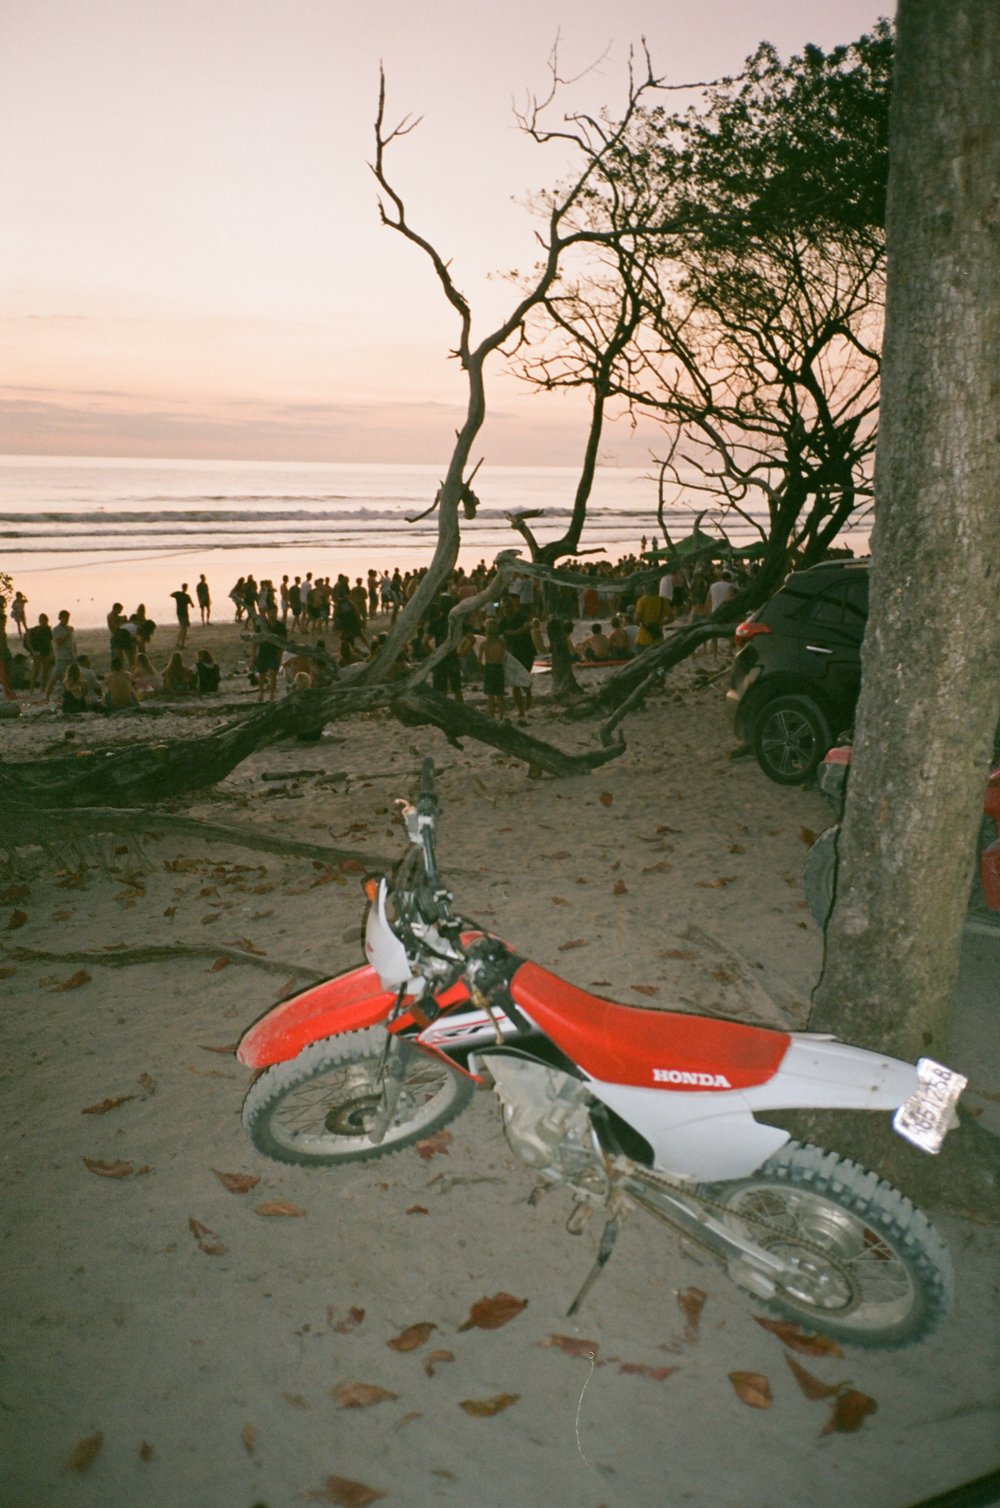 costa-rica-surfing-beach-surf-film-diaries-000975840001.jpg